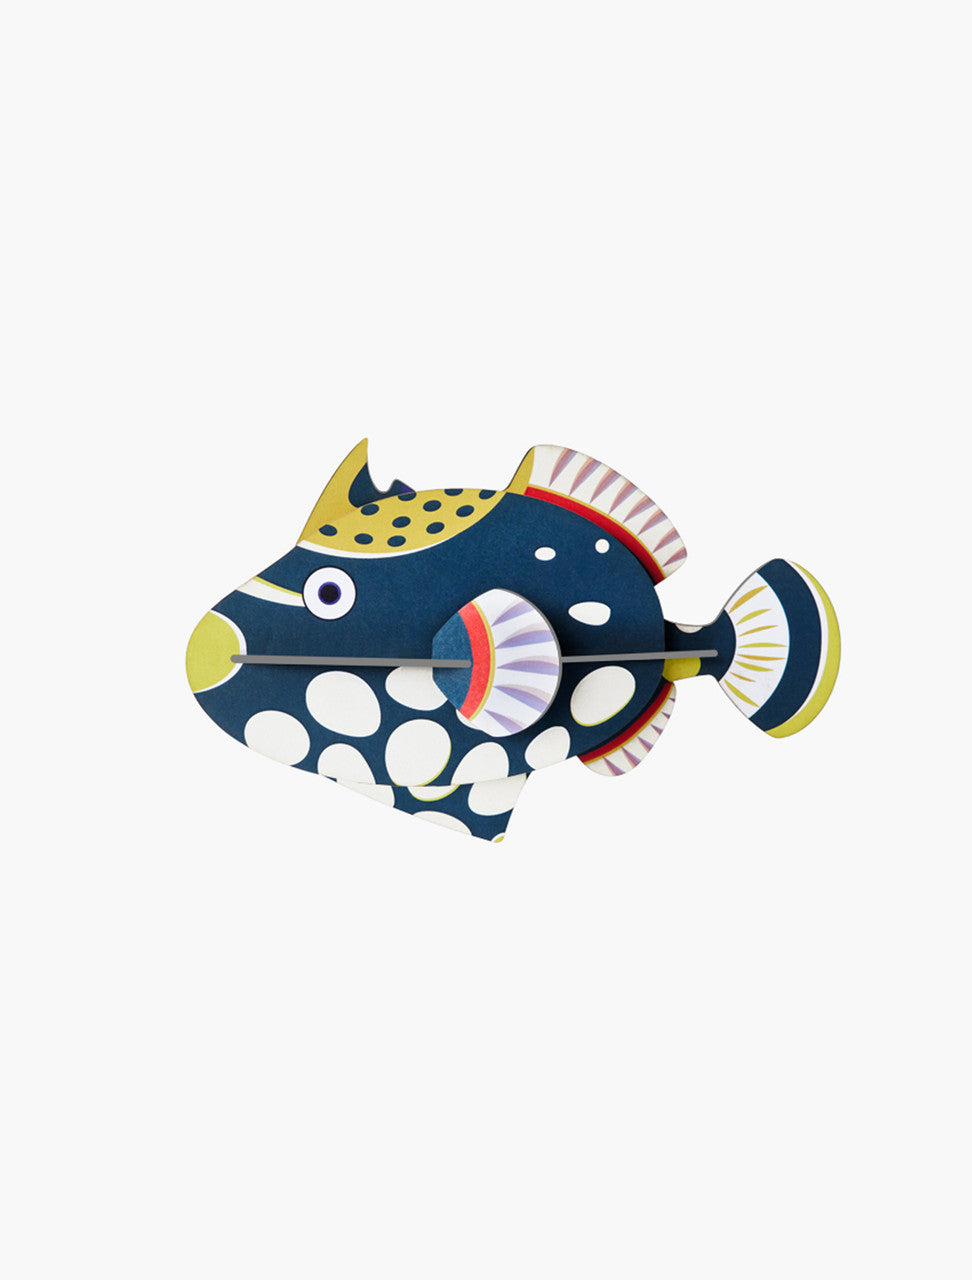 Clown Triggerfish-Little Fish Co.